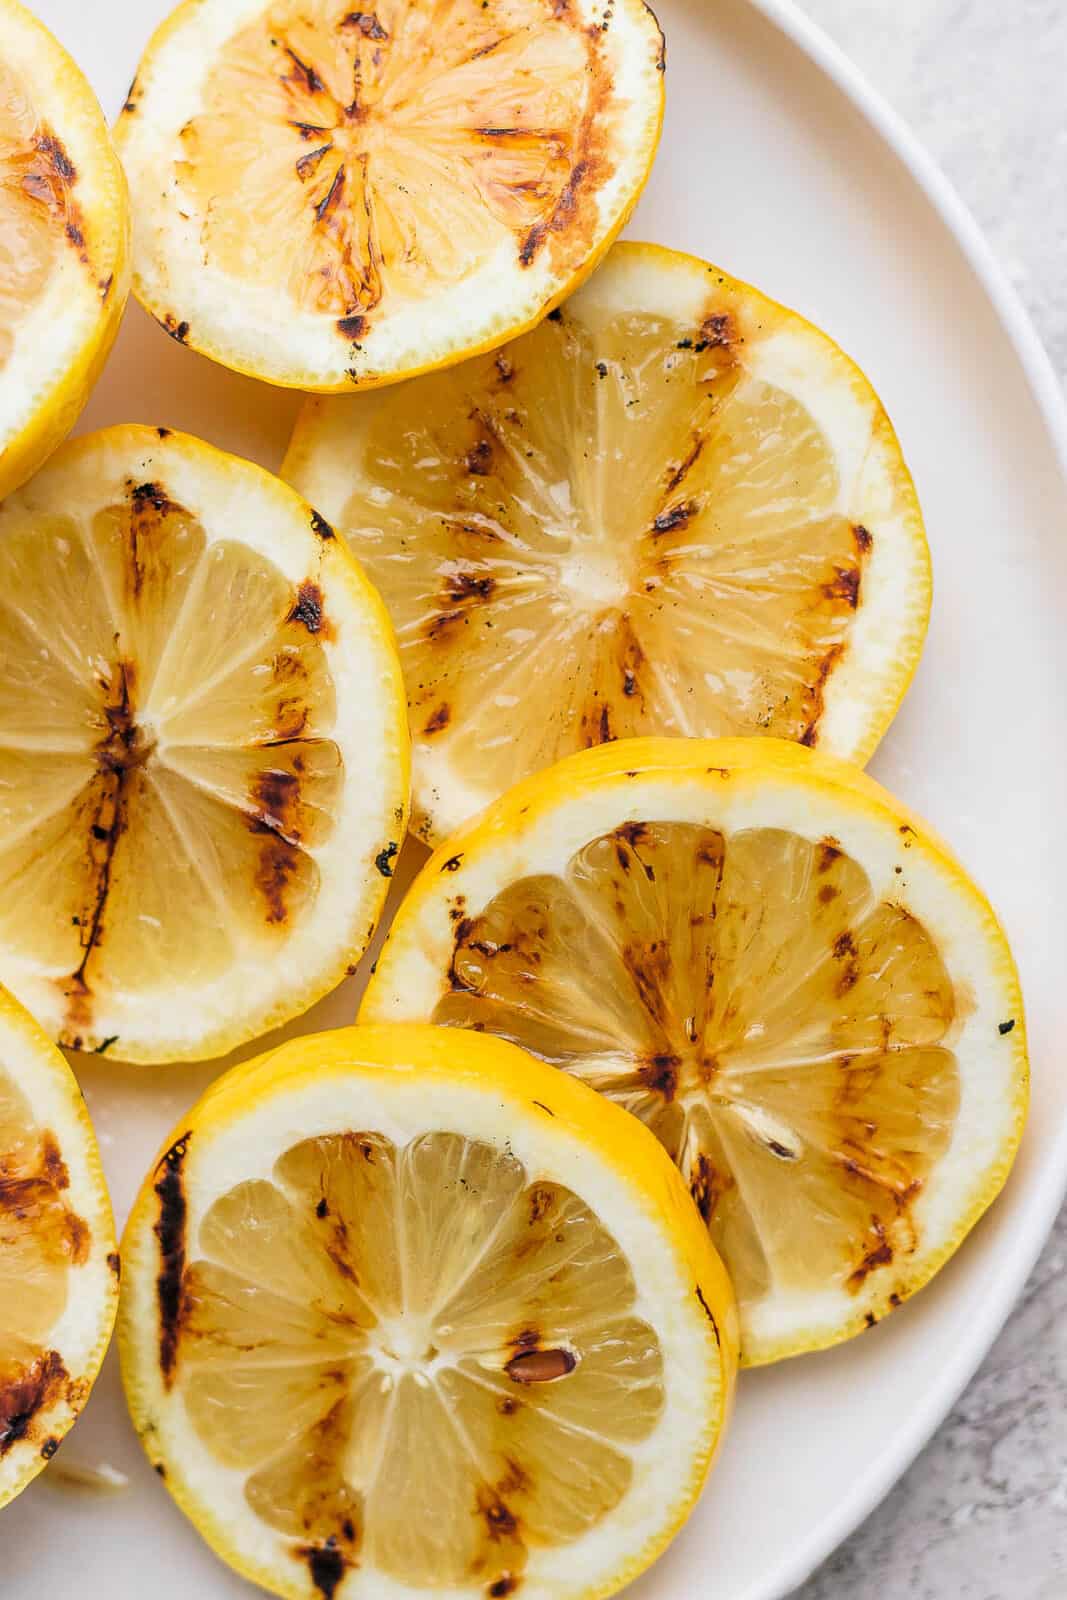 Grilled lemon slices on a plate.